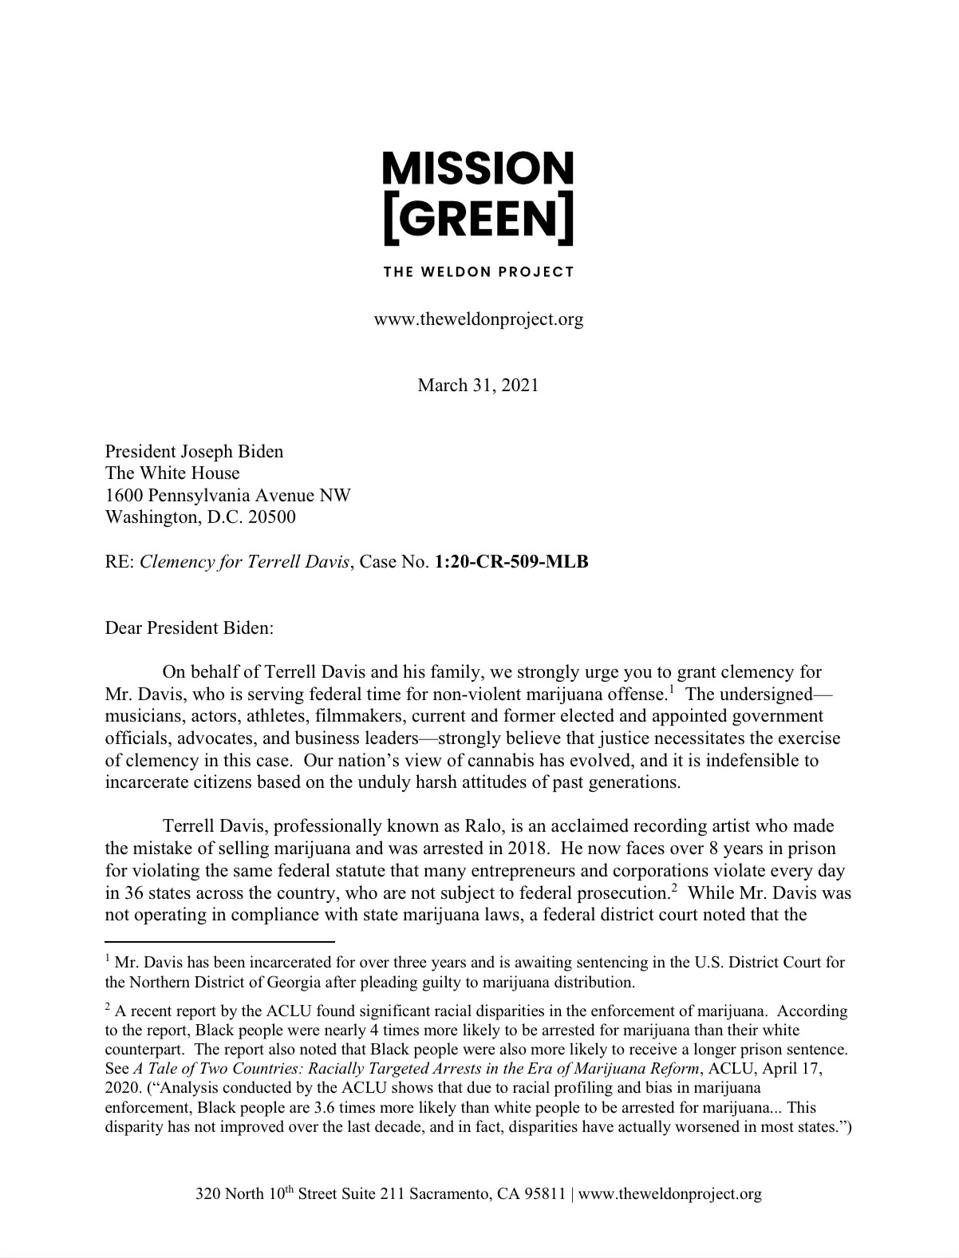 Misson Green&#x27;s letter to Biden on Ralo&#x27;s behalf